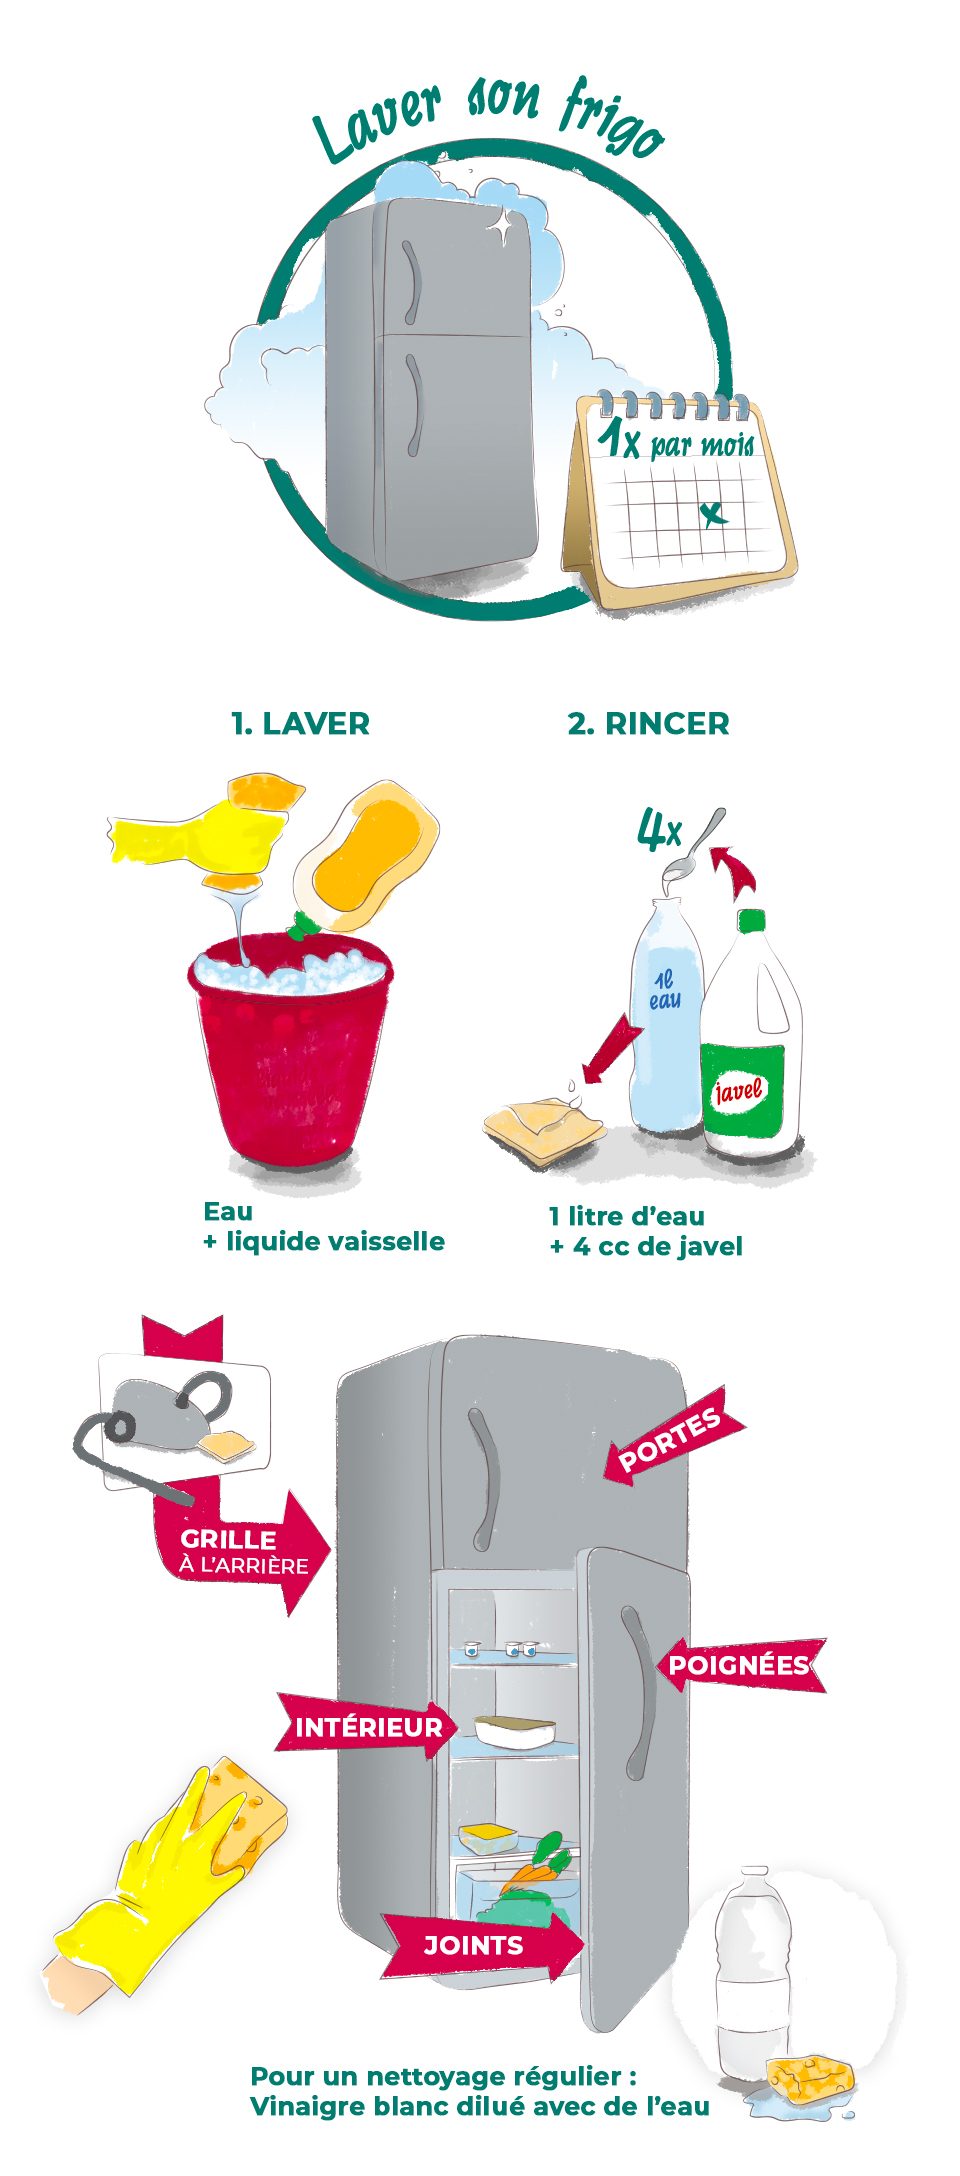 Nettoyage frigo : nos conseil et astuces pour un frigo propre et sain